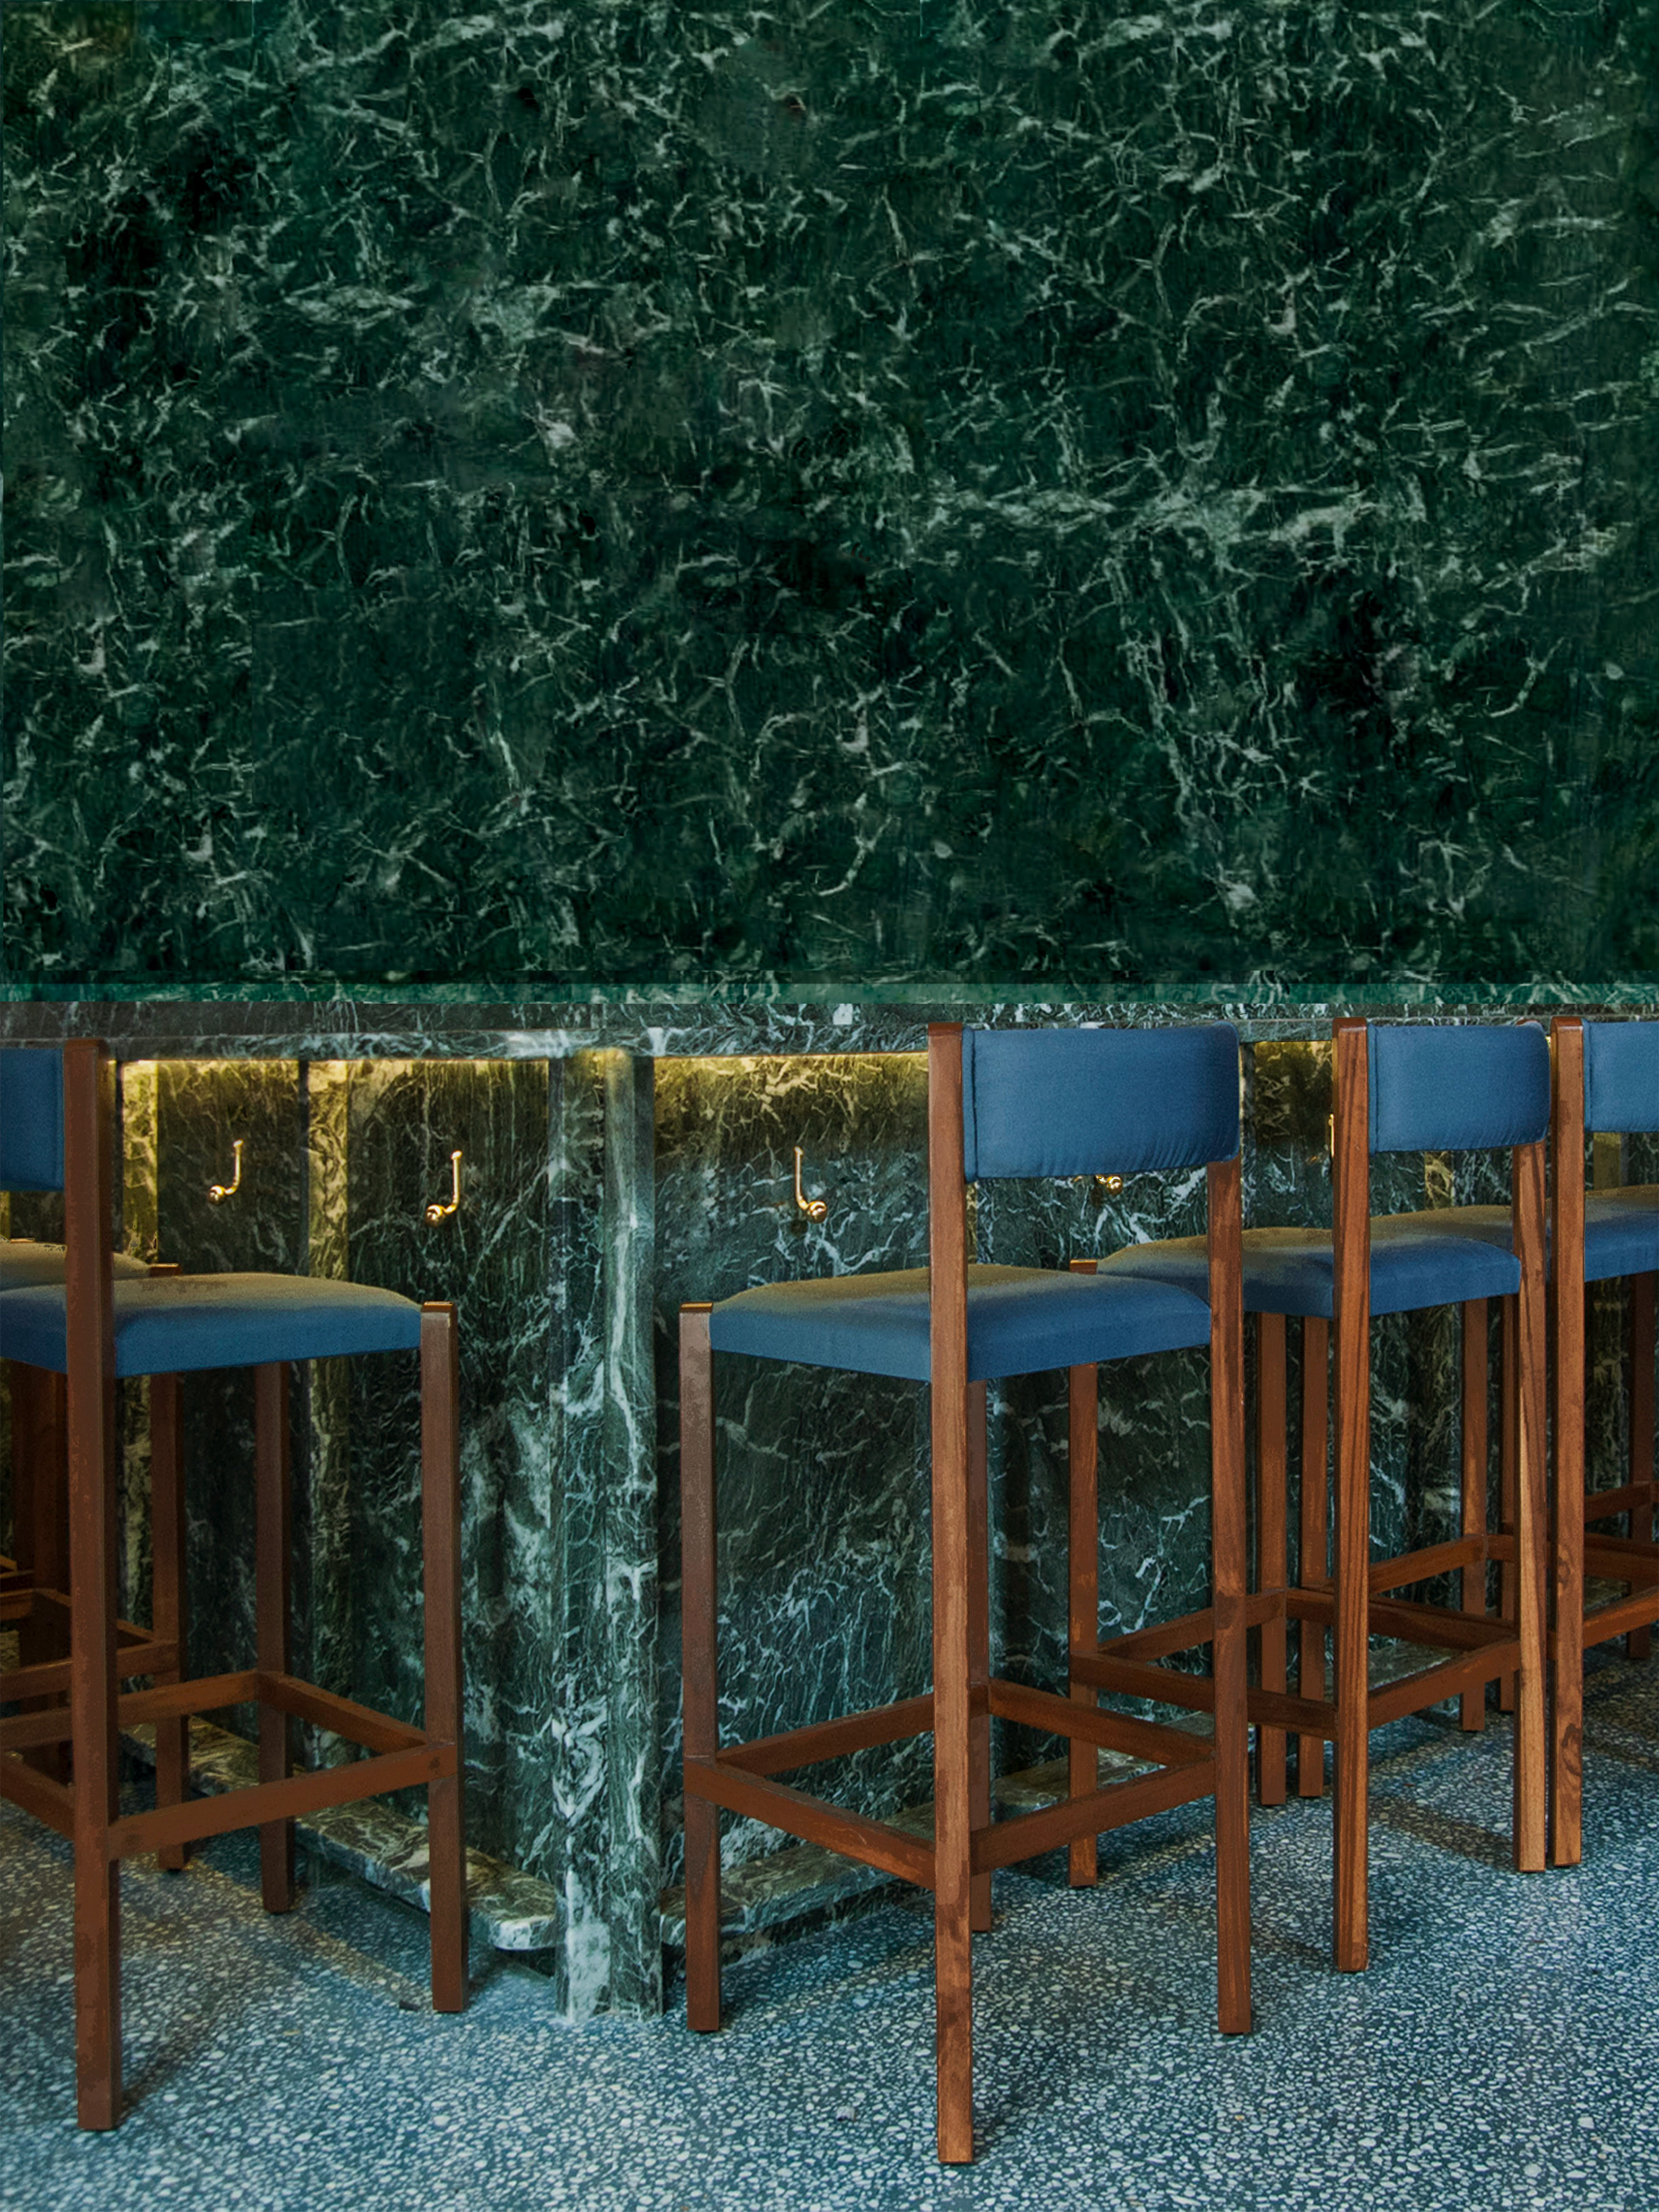 https://www.sitepractice.com/wp-content/uploads/2019/11/p2-06-site-practice-americano-restaurant-khala-goda-chef-alex-sanchez-mumbai-green-marble-bar-anne-geenen.jpg